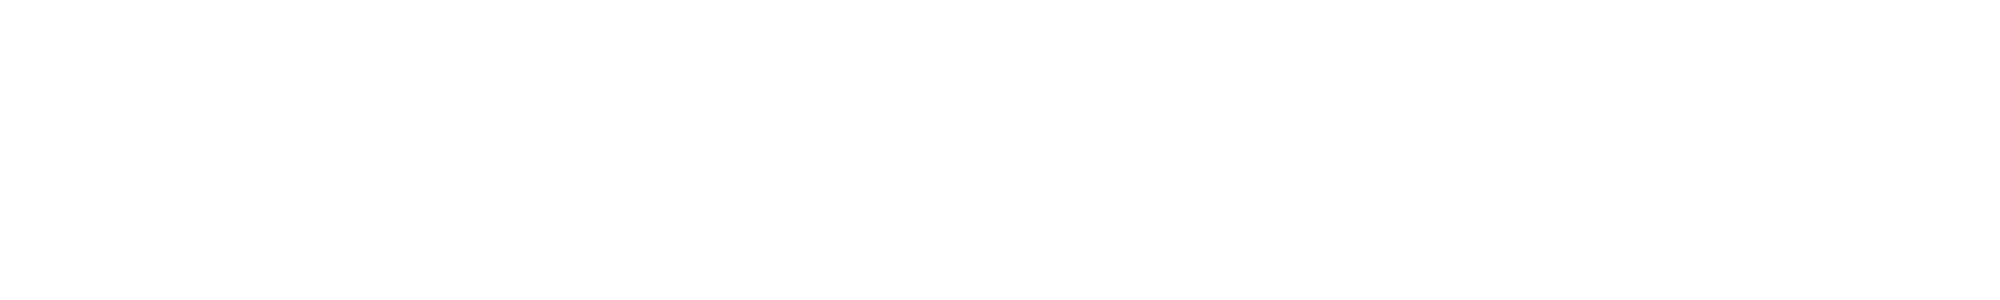 Leadership Stratcomm LLC